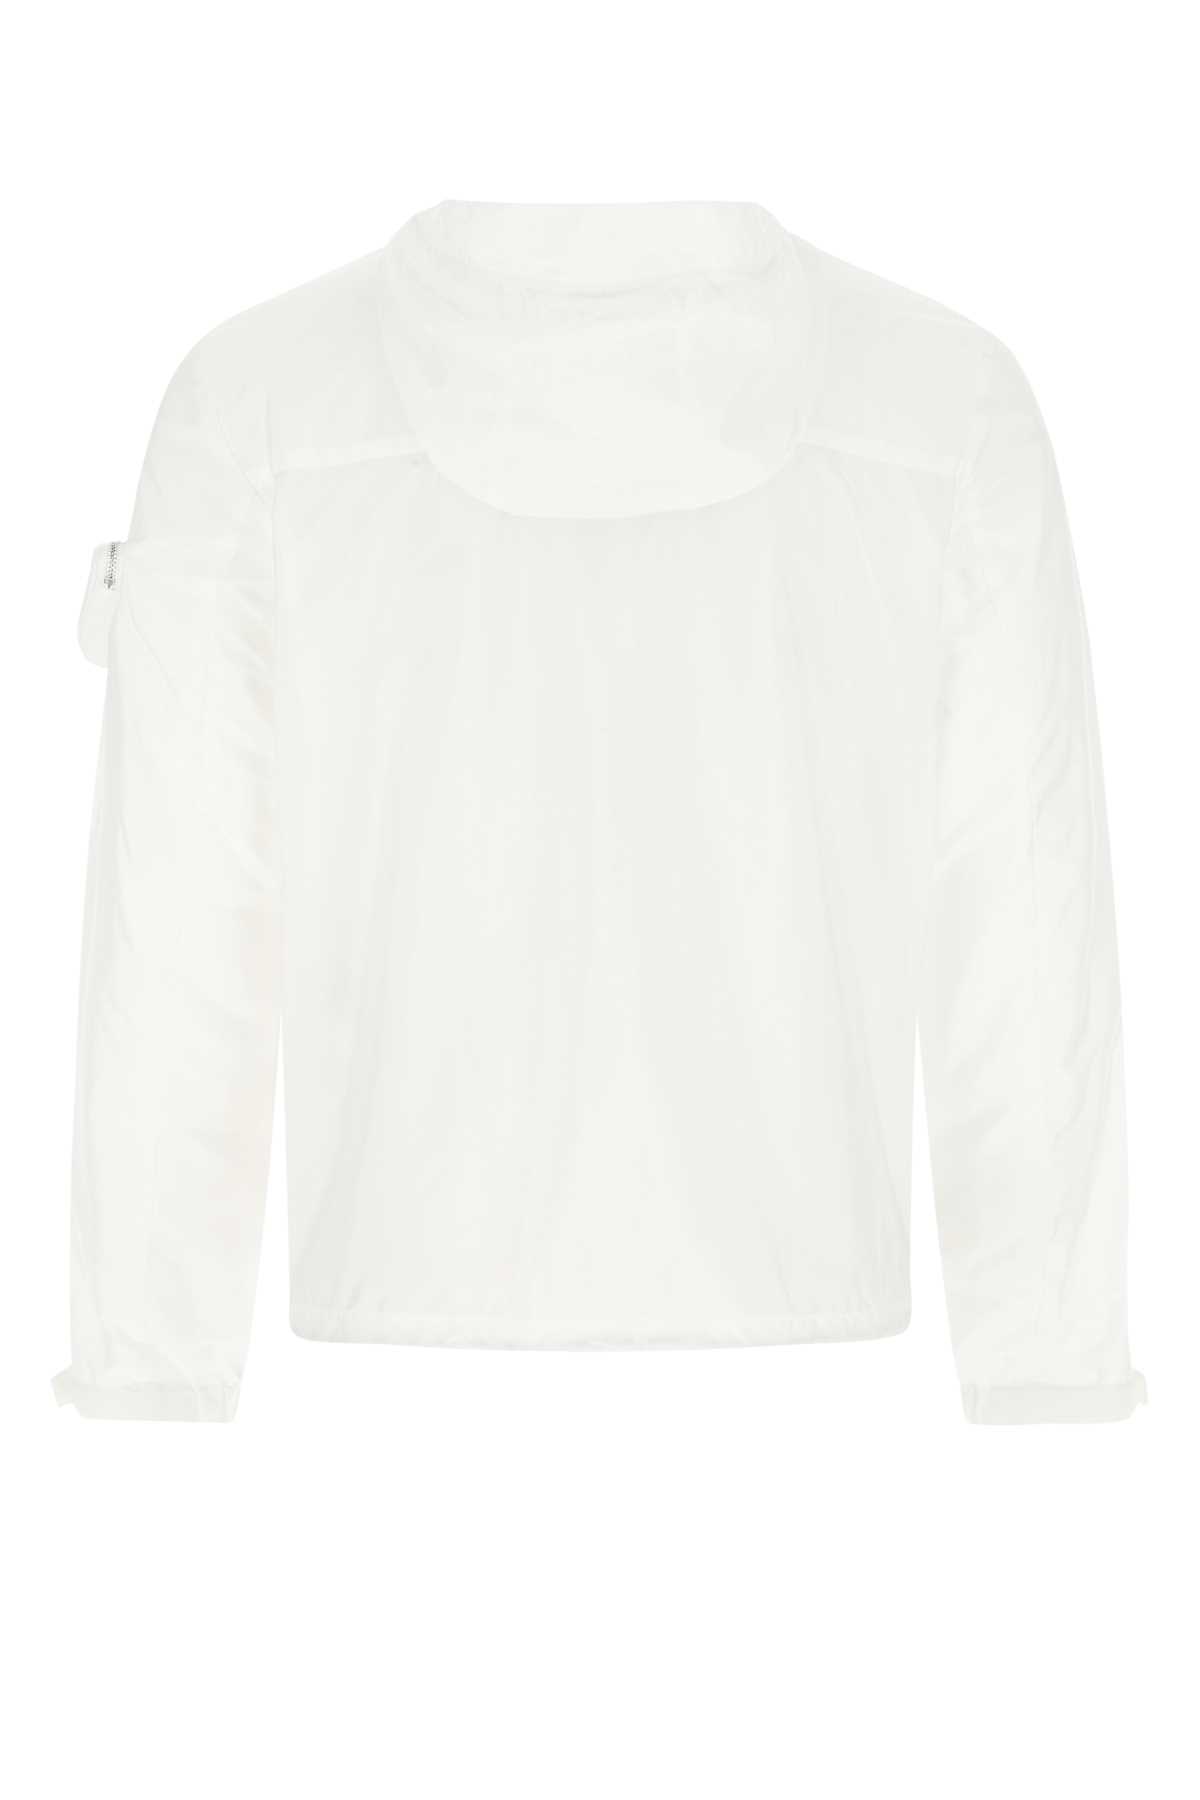 Prada White Re-nylon Jacket In F0009